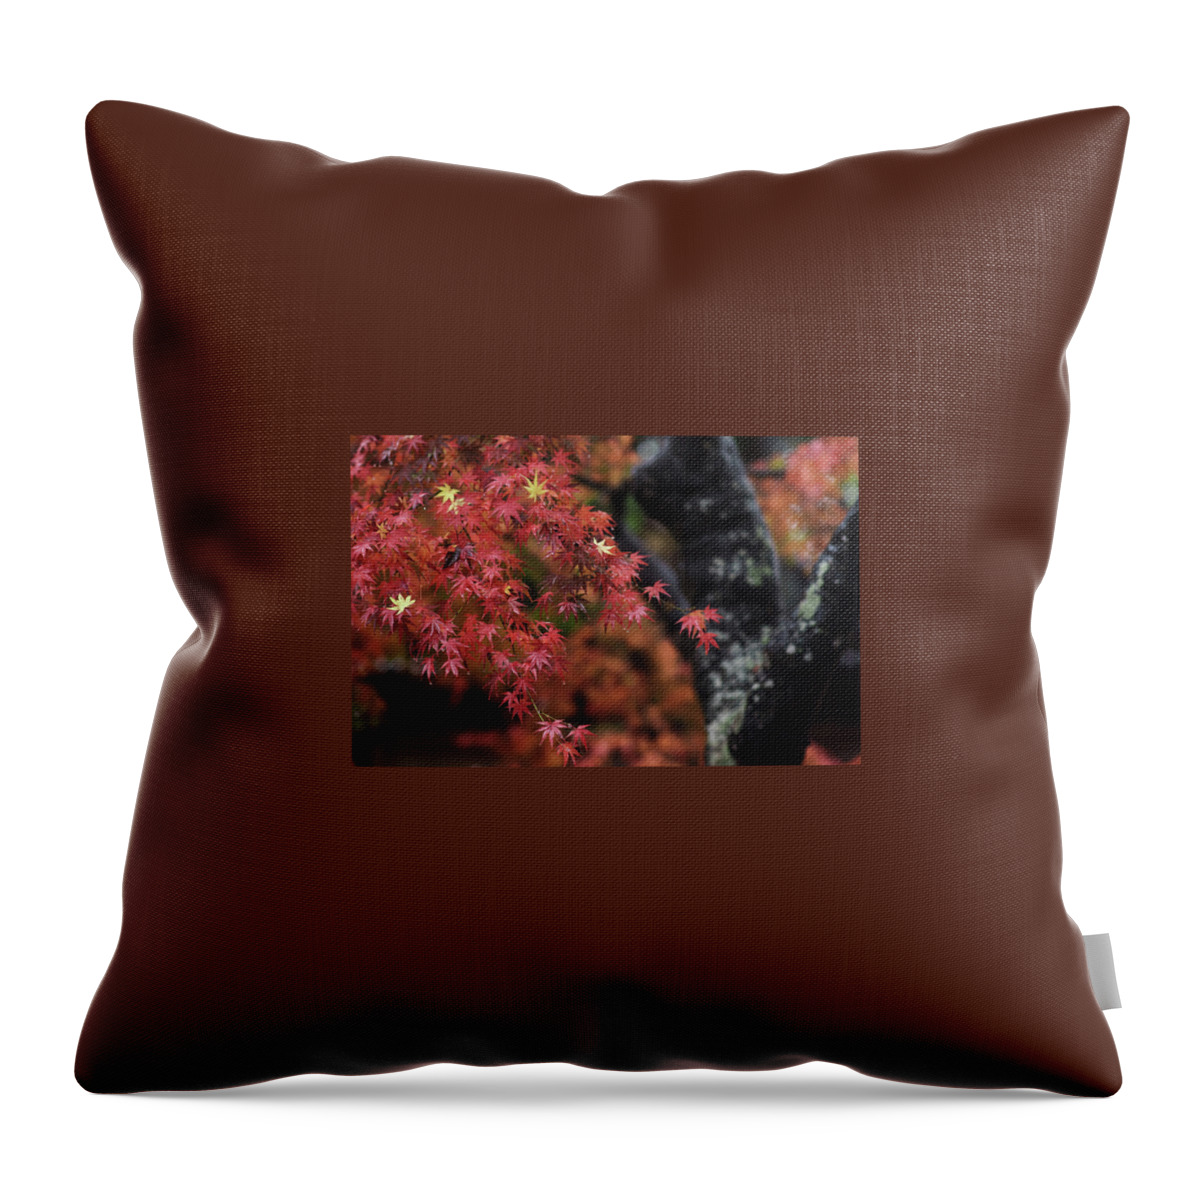 Autumn Throw Pillow featuring the photograph Autumn by Hiro N